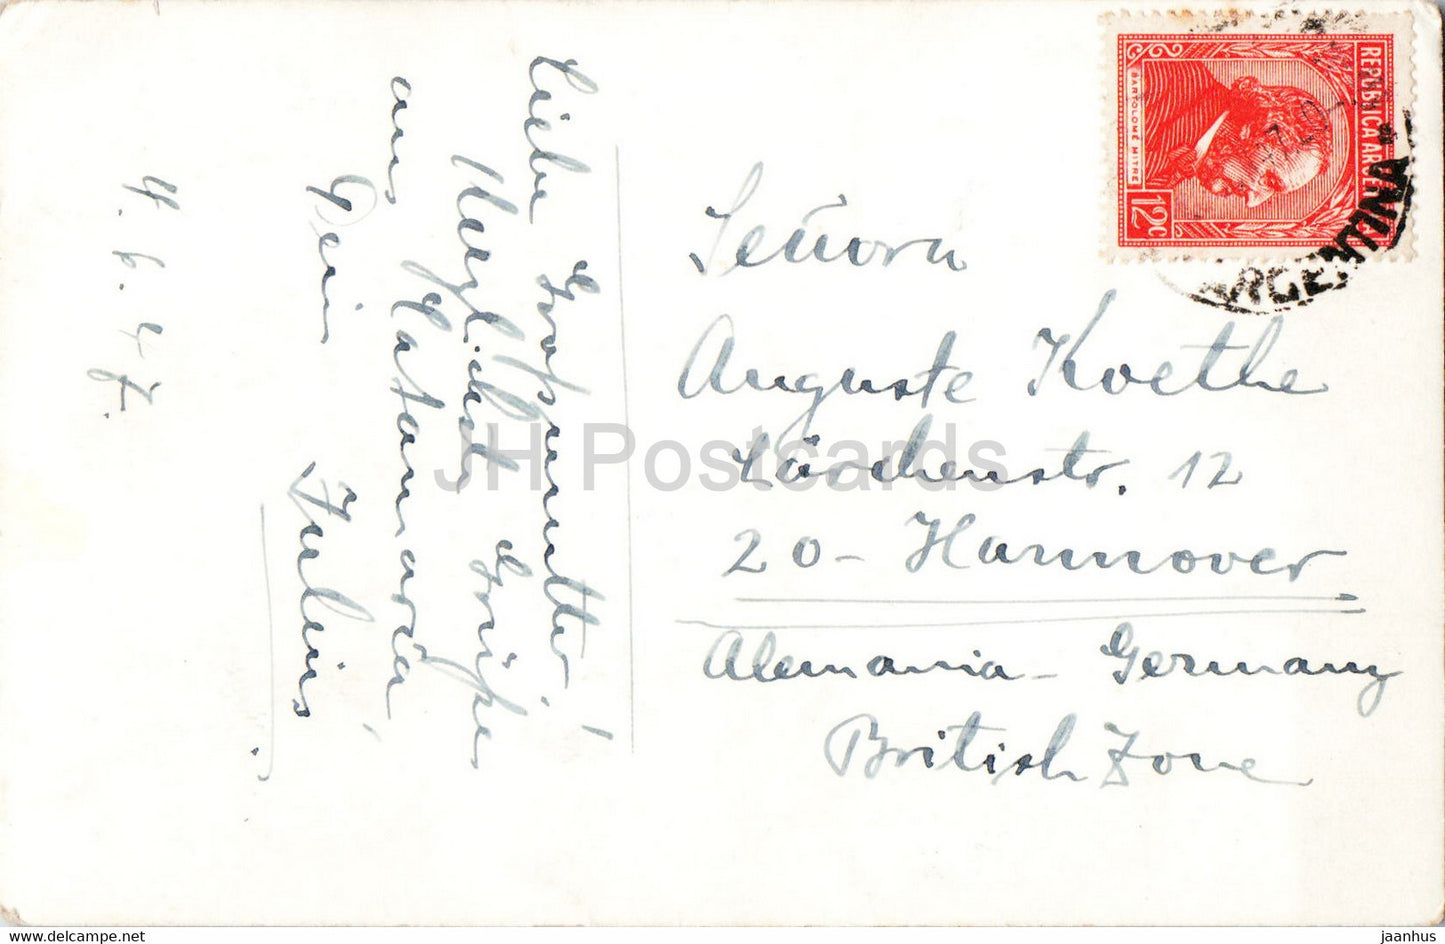 Catamarca - El Rodeo 1939 - 44 - carte postale ancienne - 1947 - Argentine - occasion